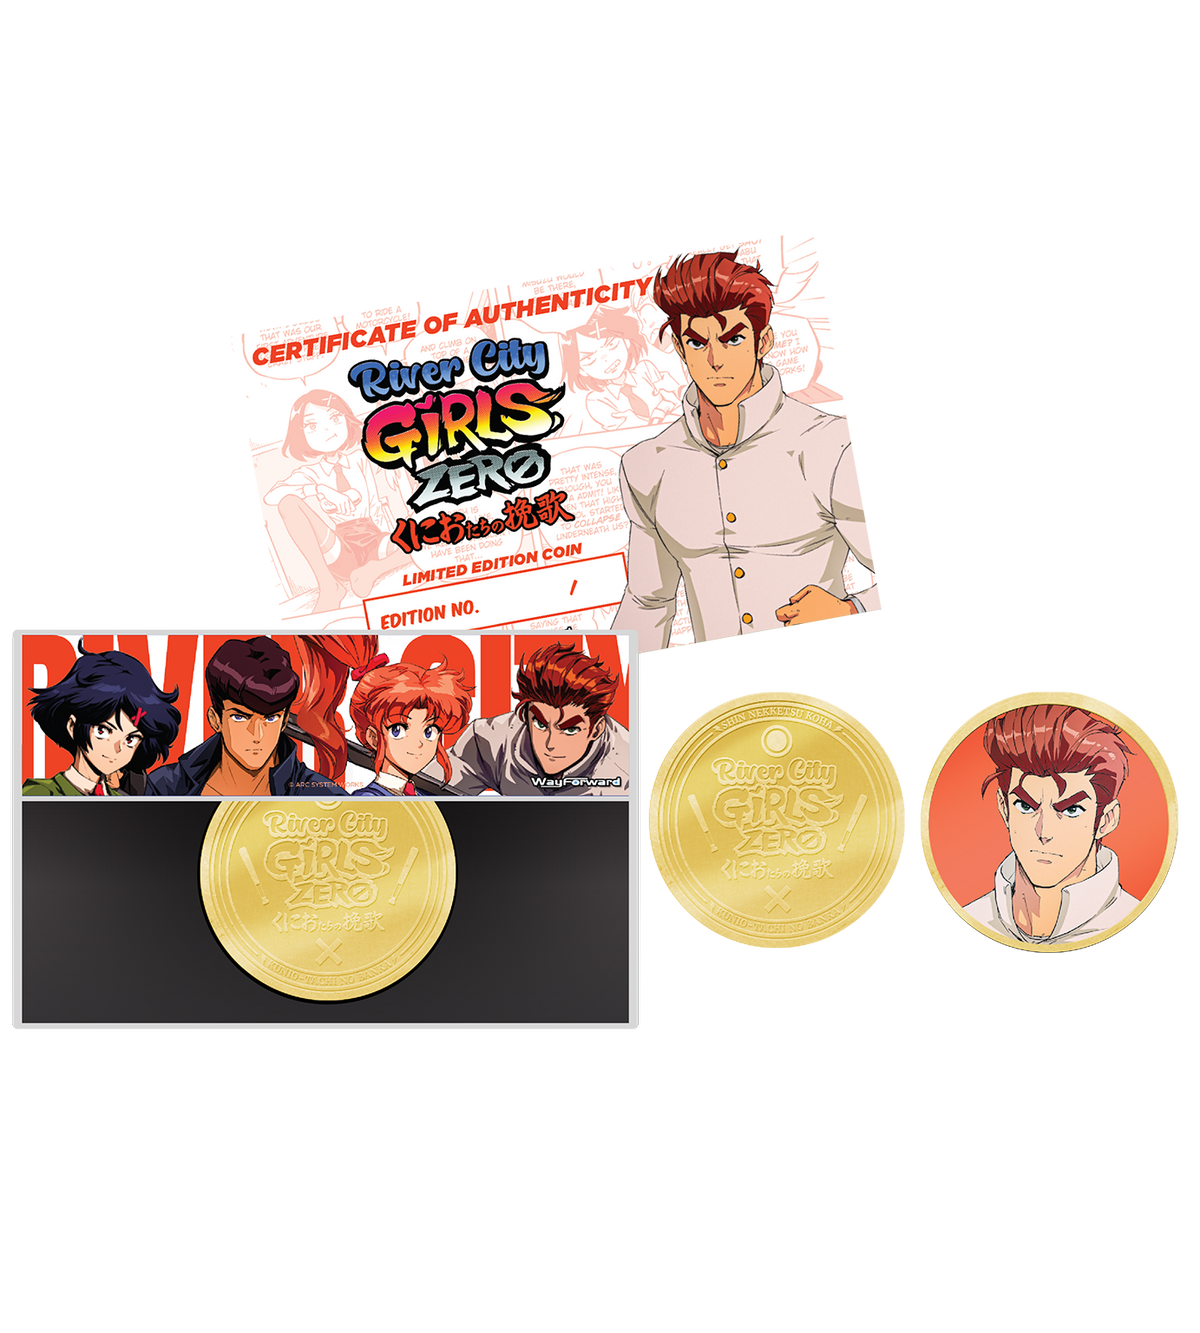 River City Girls Zero Kunio Collectible Coin